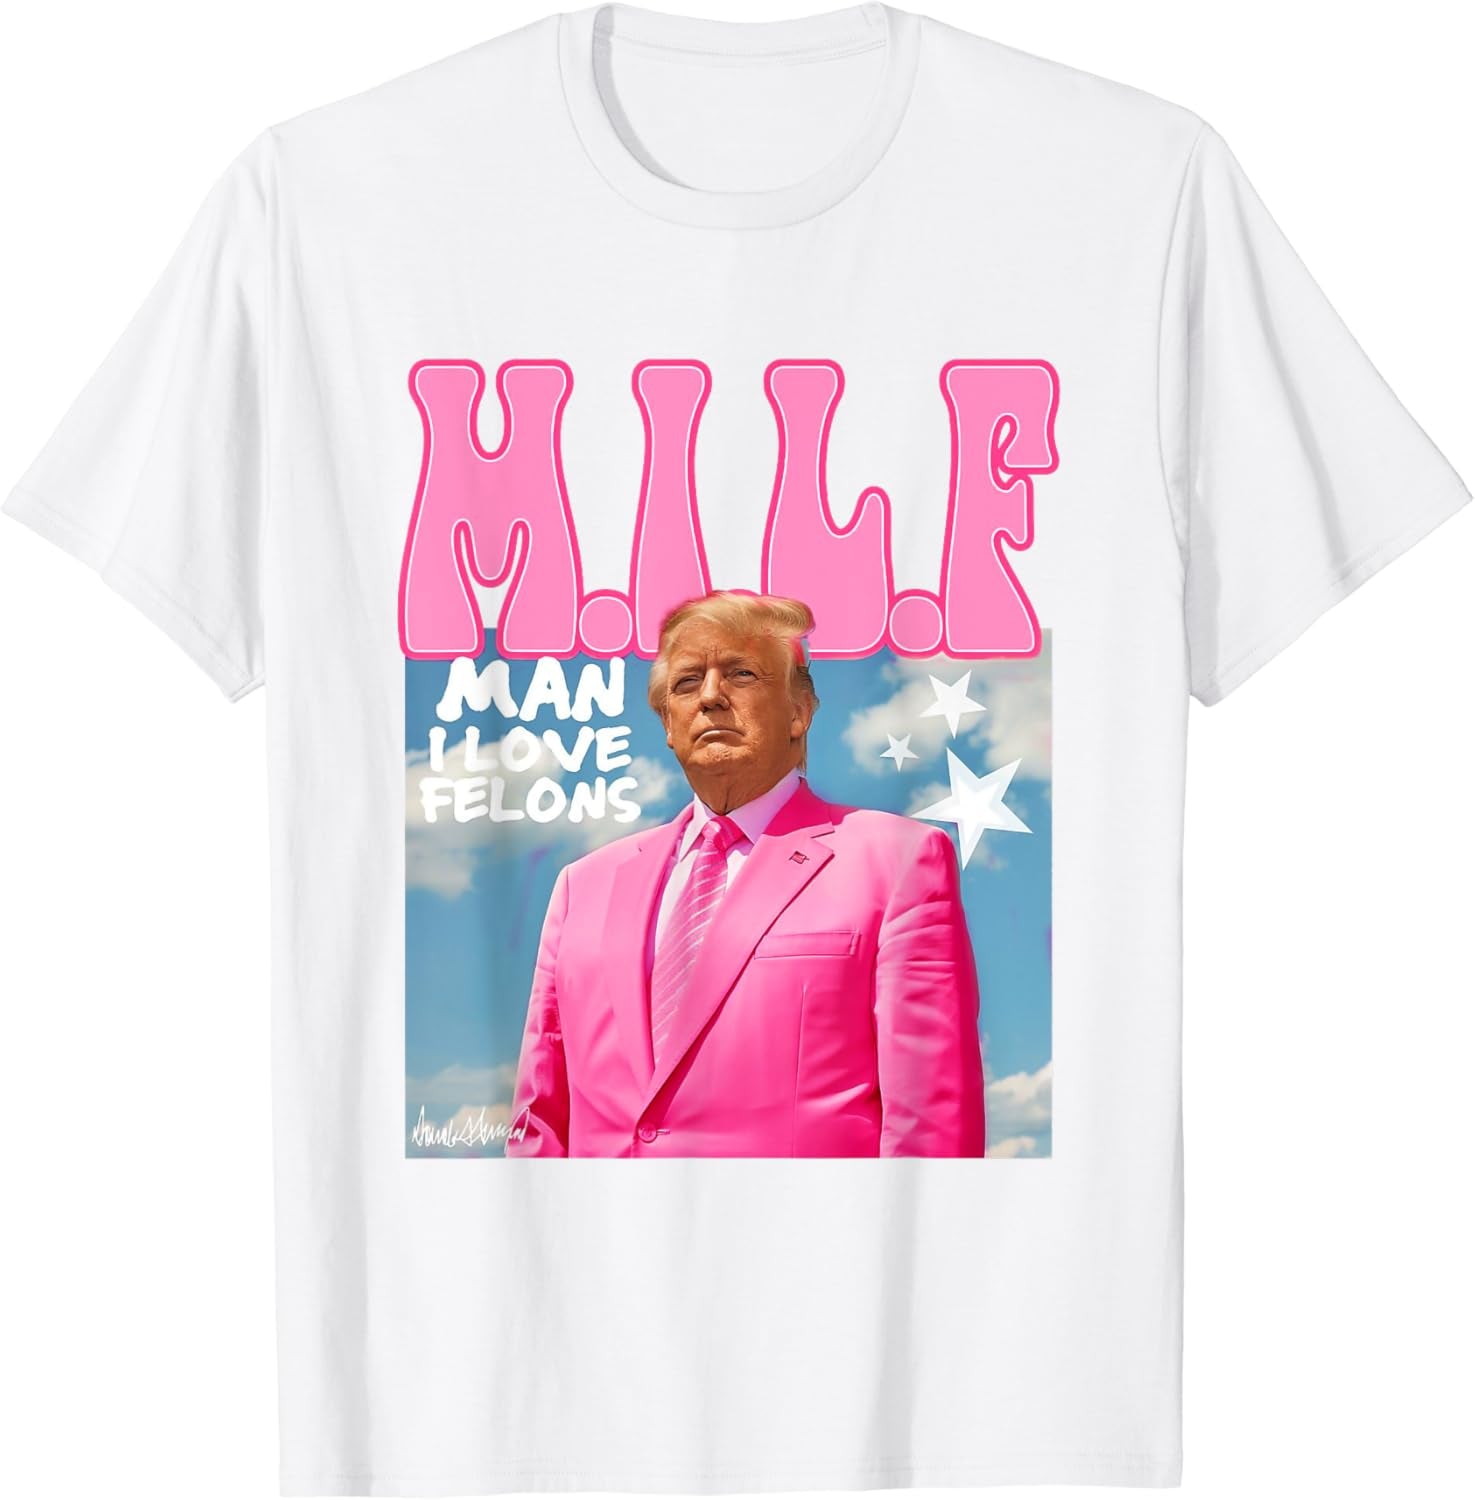 Man I Love Felons Trump Shirt, Gift For Trump Fans, Election 2024